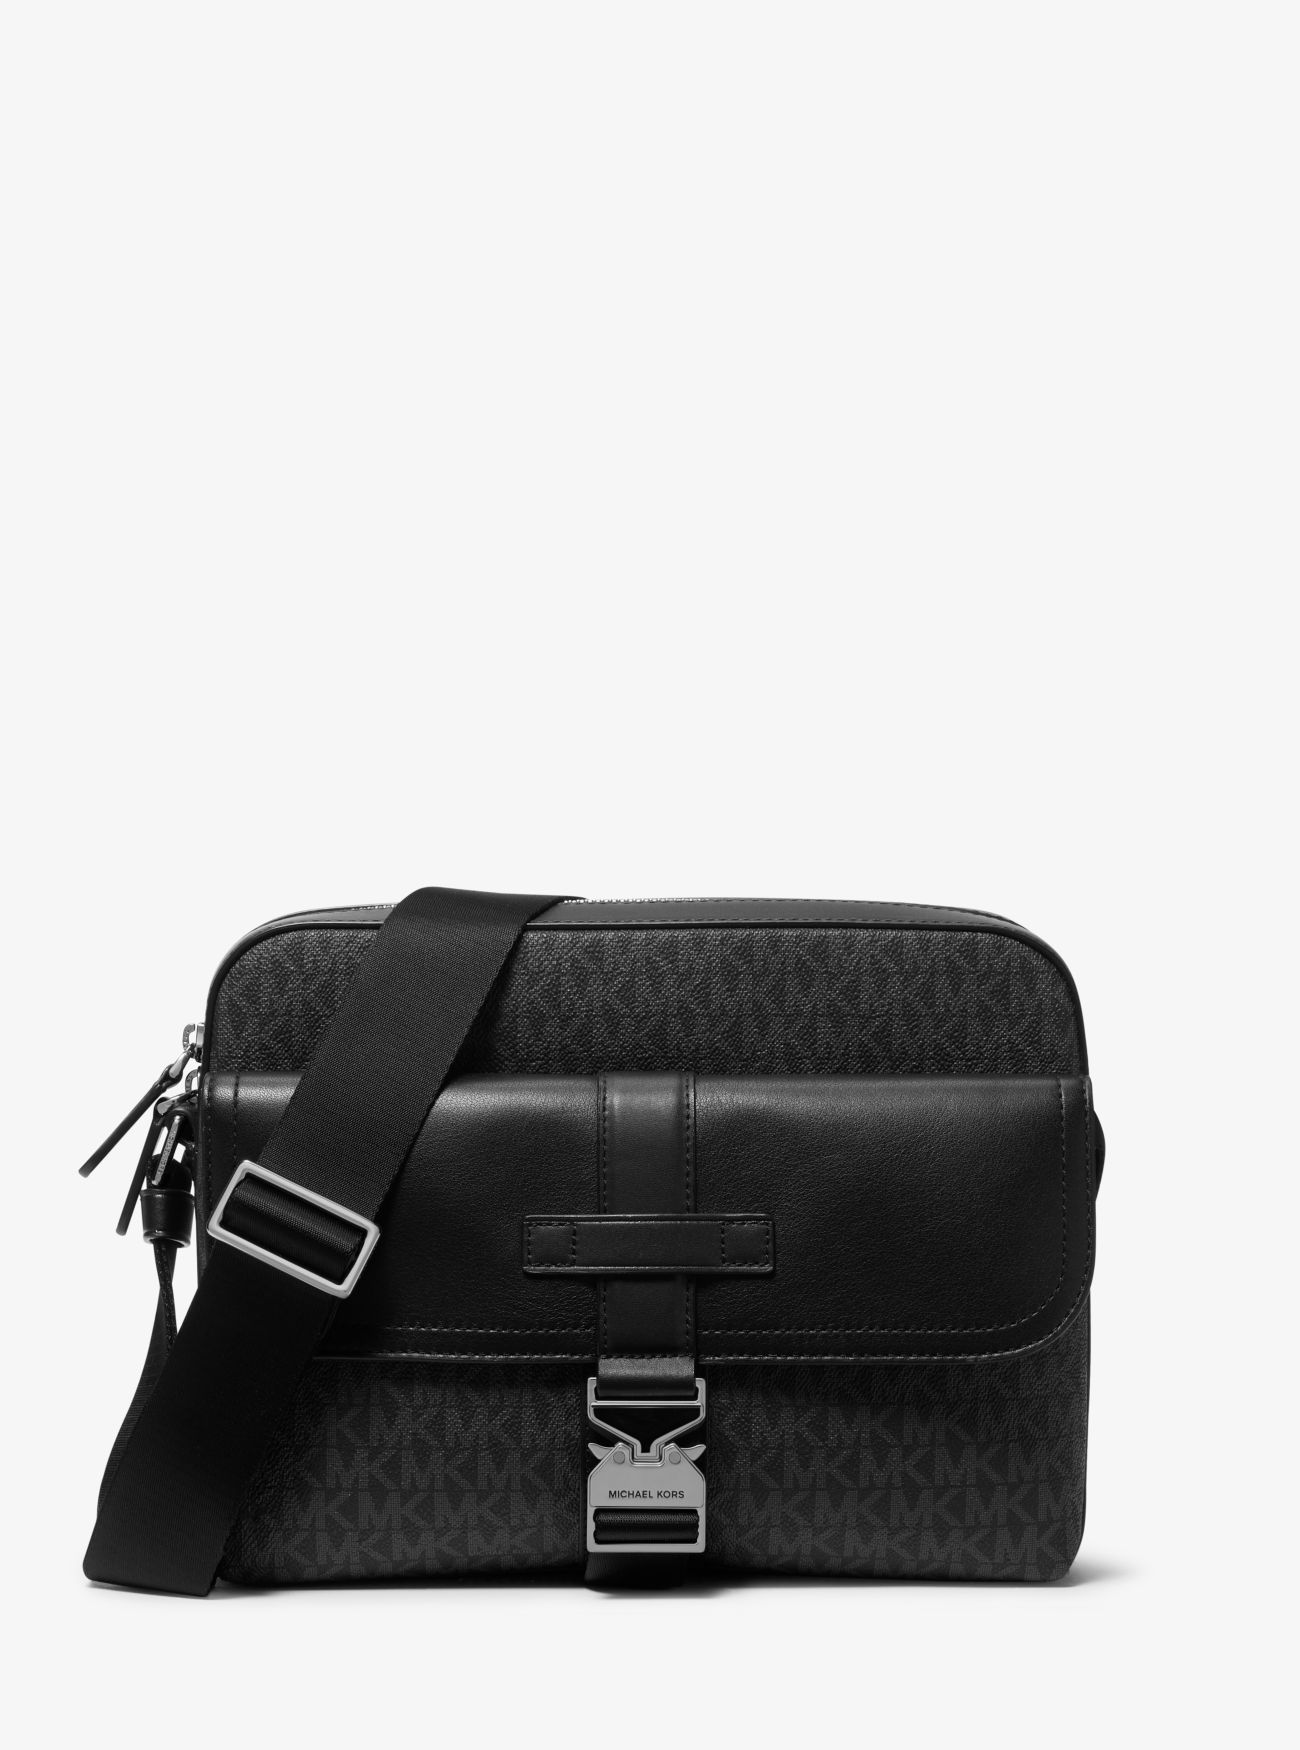 MK Hudson Signature Logo and Leather Camera Bag - Black - Michael Kors